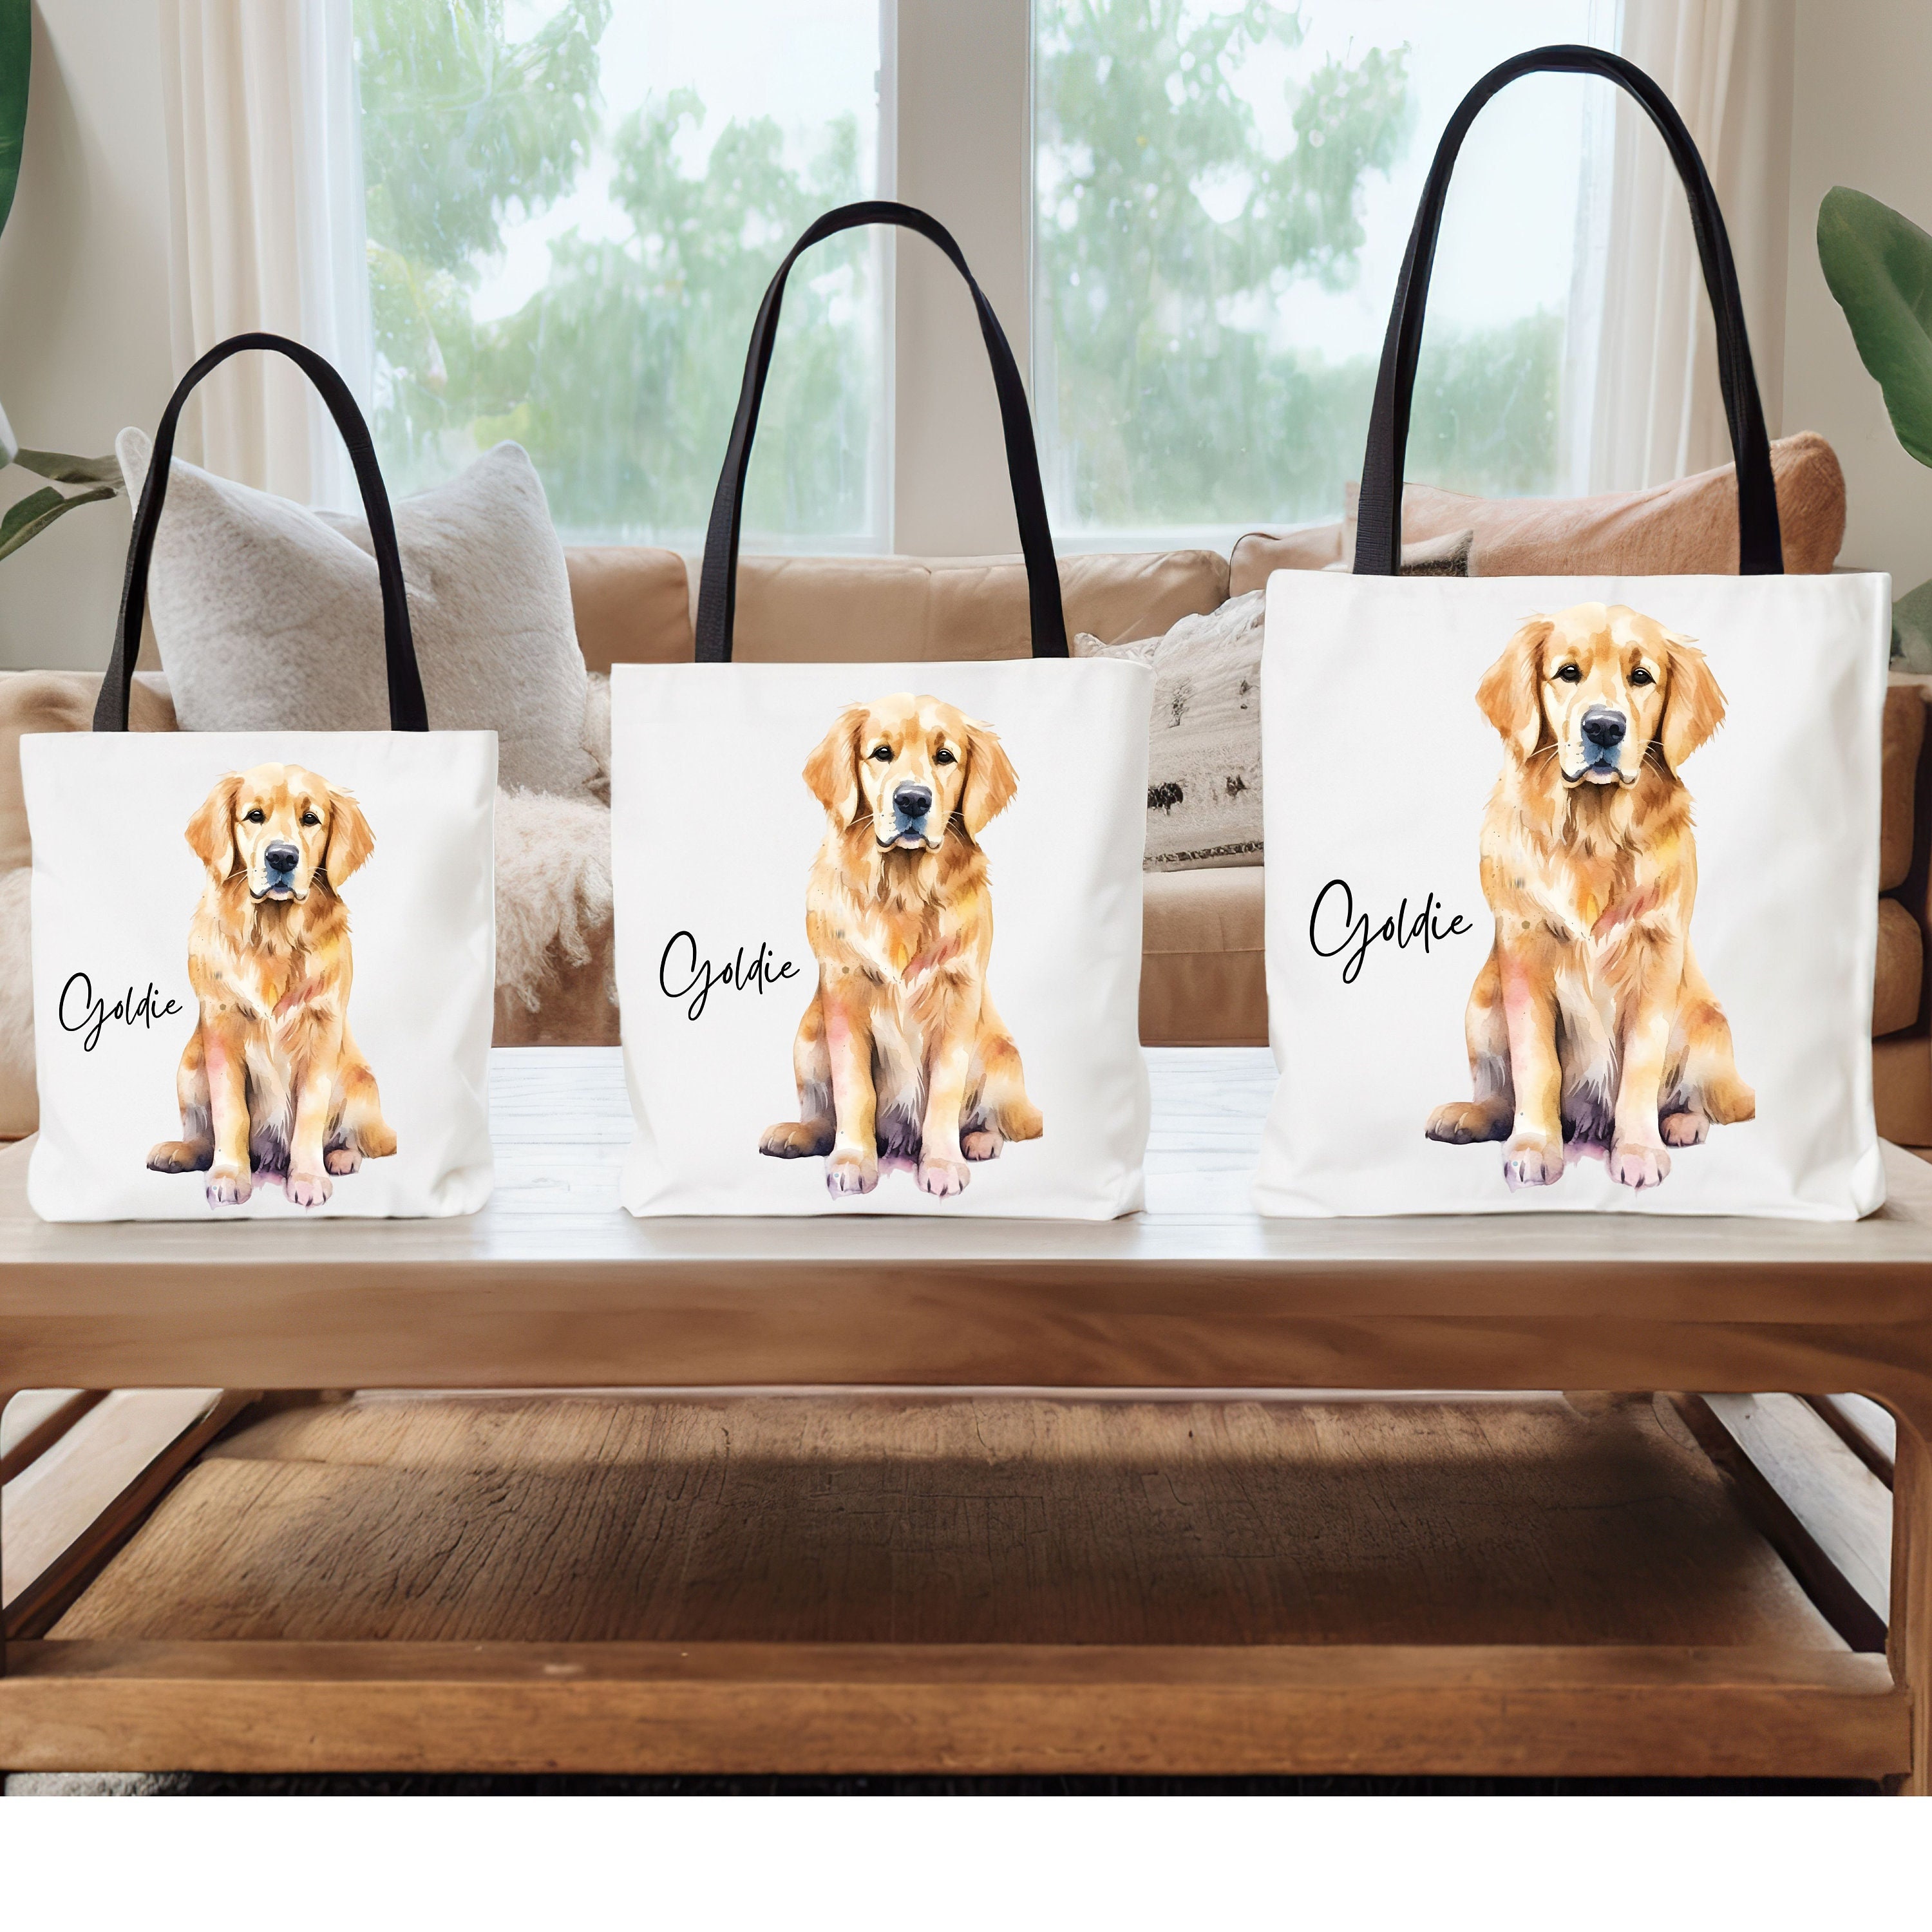 Dogmum Leather Bag - Dog Mom Gift Ideas - Women's Pu Leather Bag